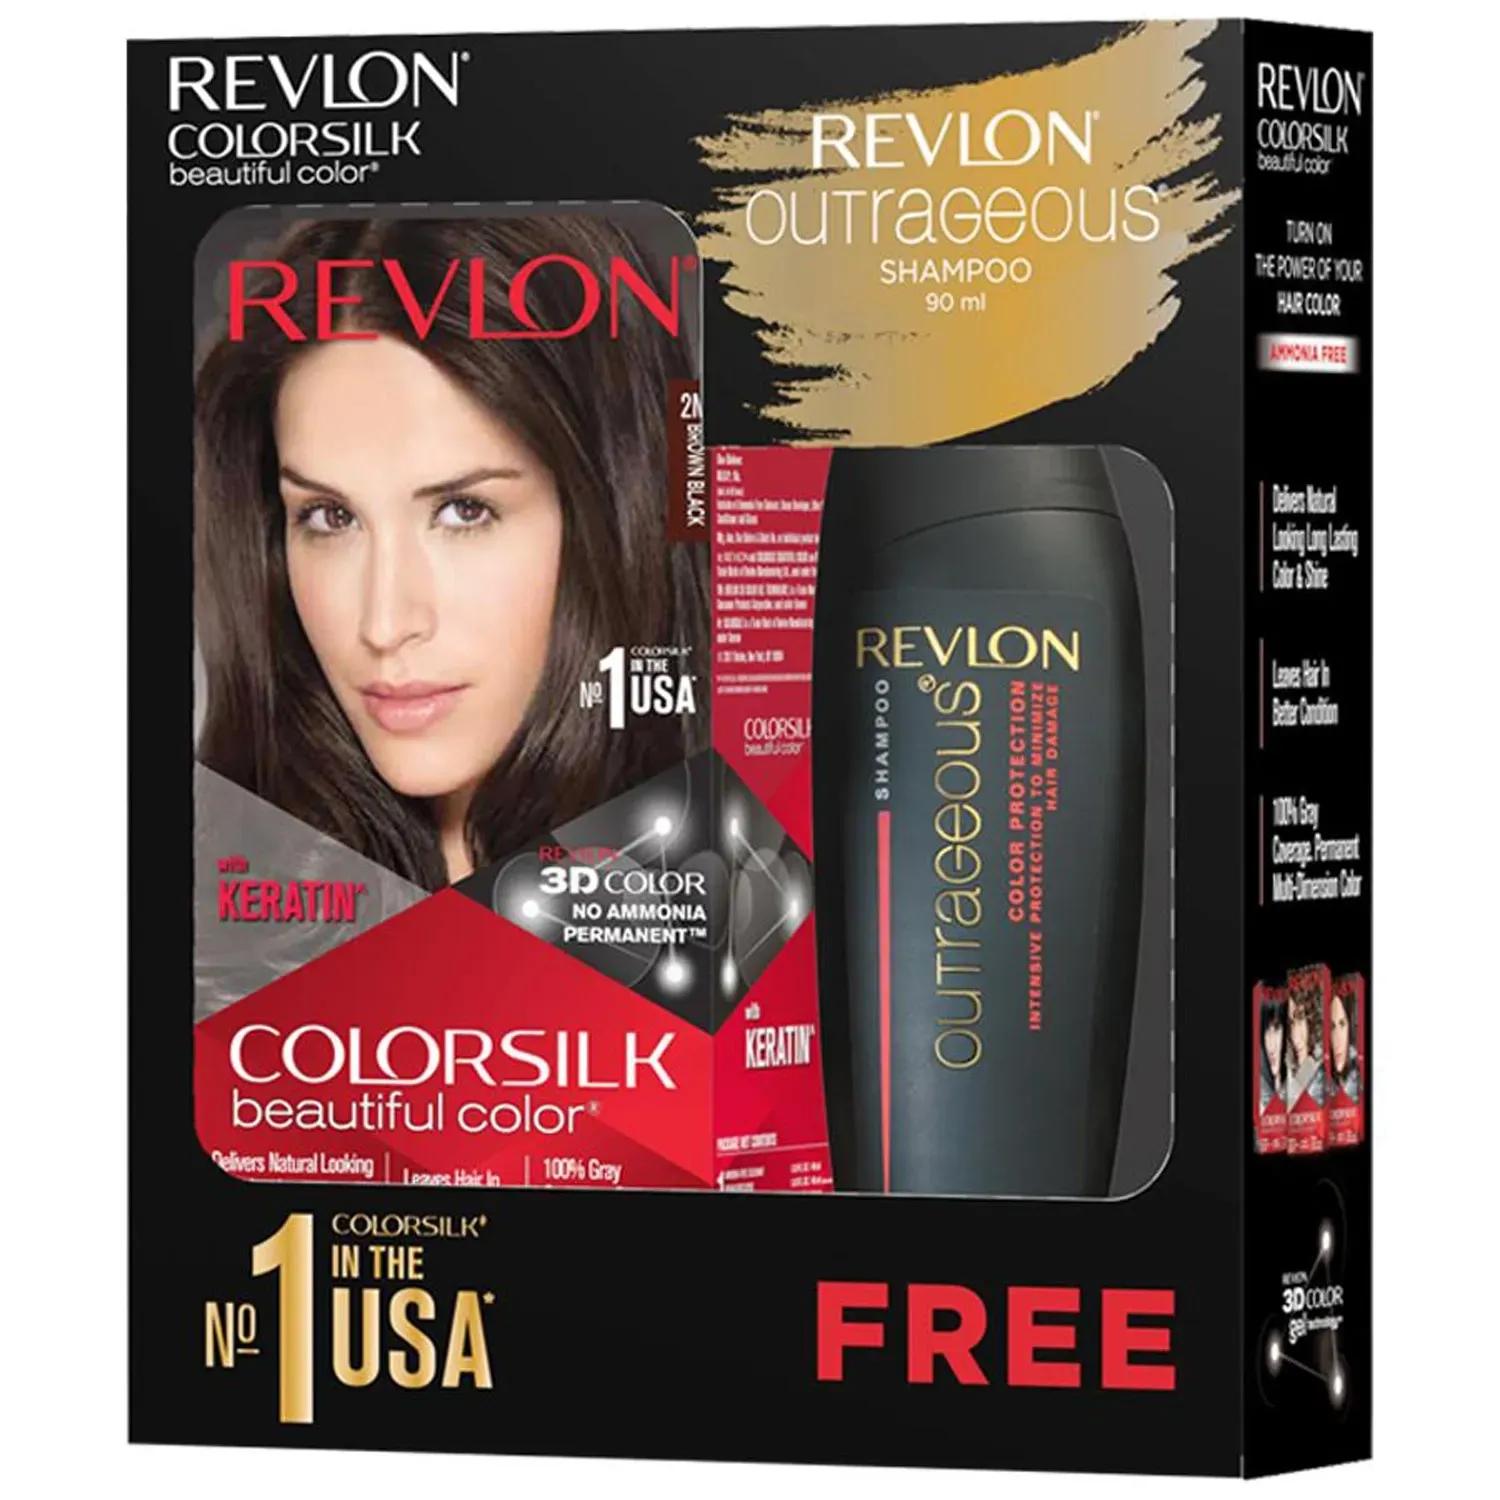 revlon colorsilk beautiful hair color with keratin + free shampoo - 2n brown black (91.8ml)